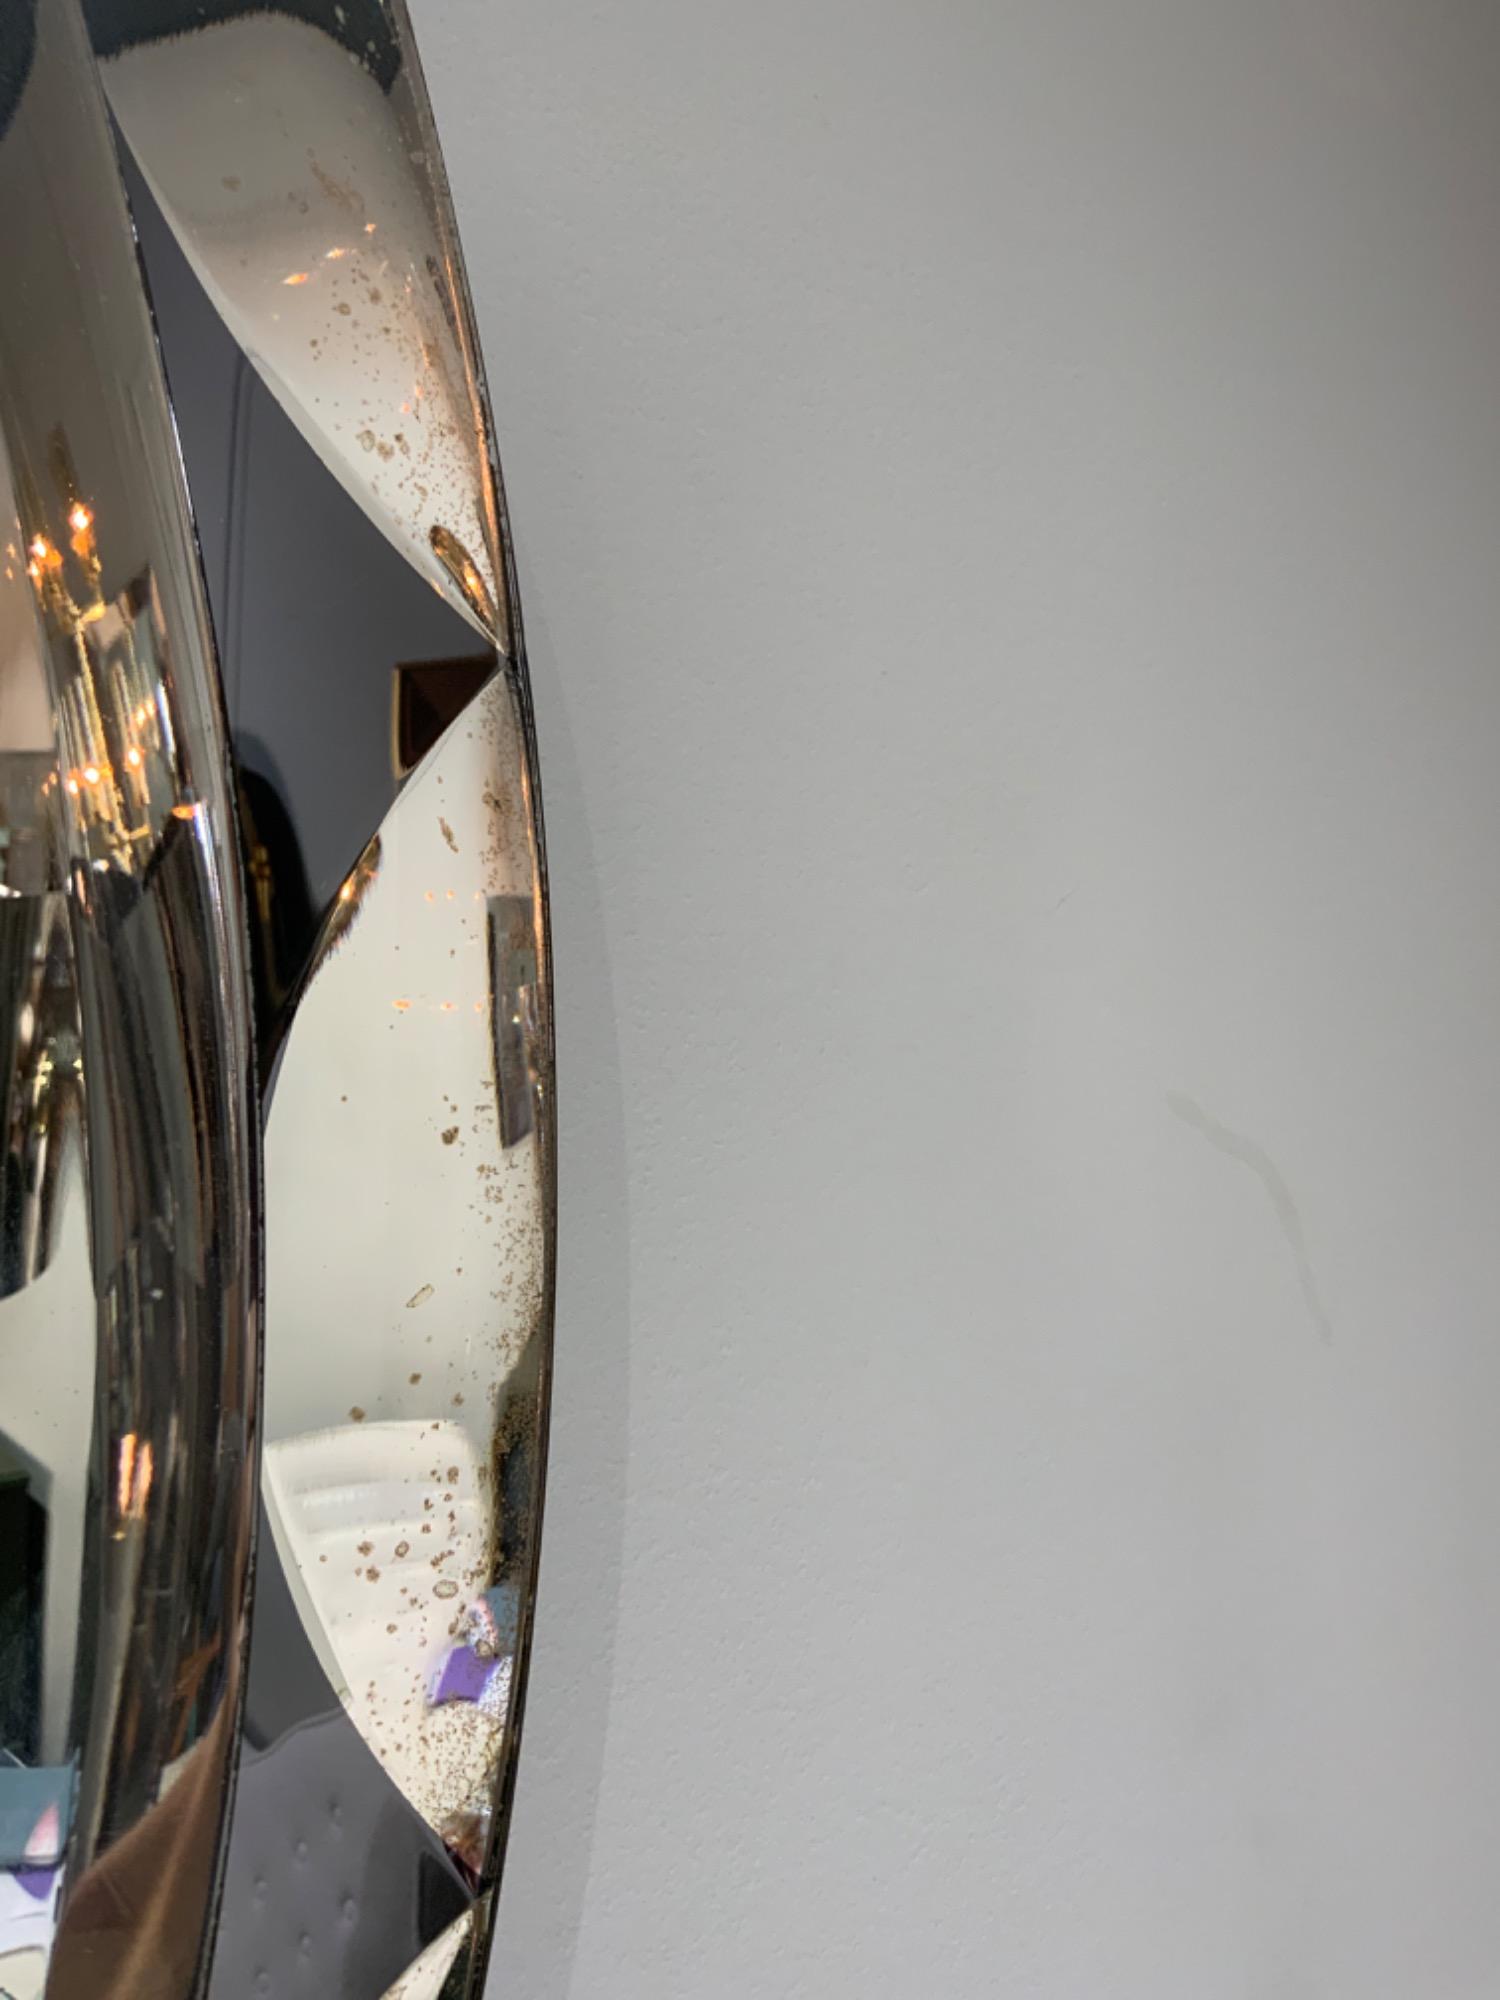 Cristal art mirror italy 1960